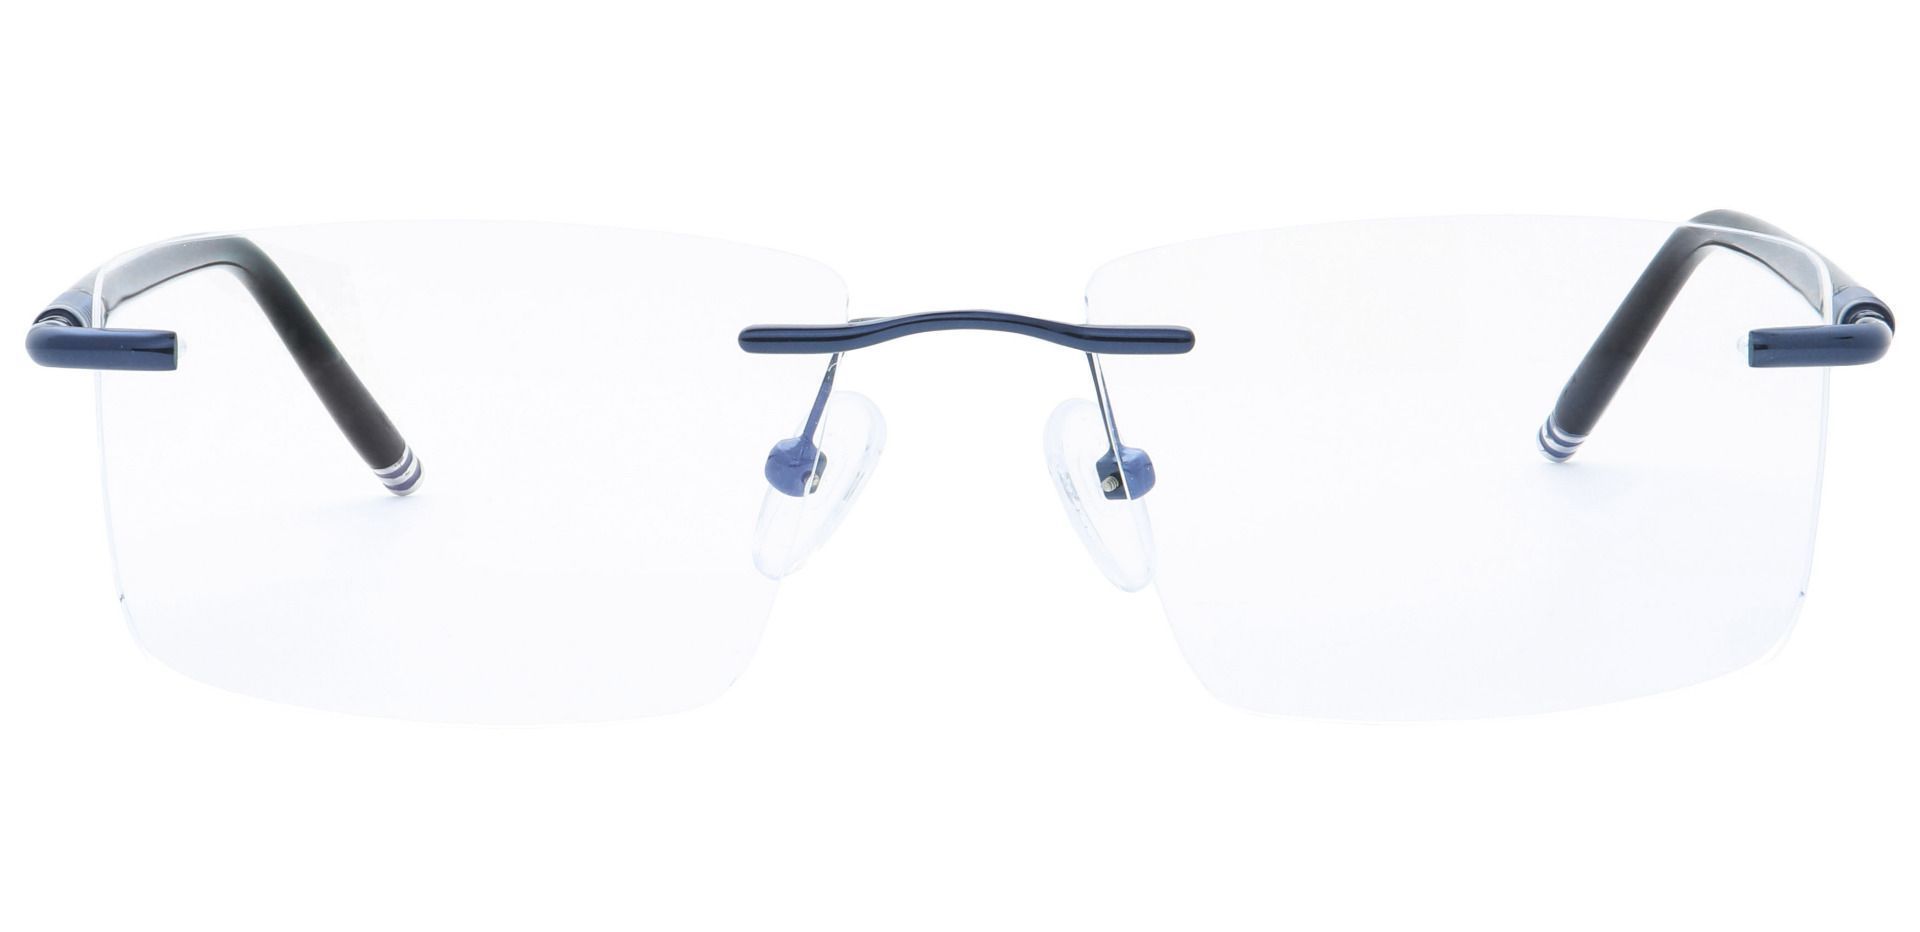 Kenobi Rimless Progressive Glasses - Blue